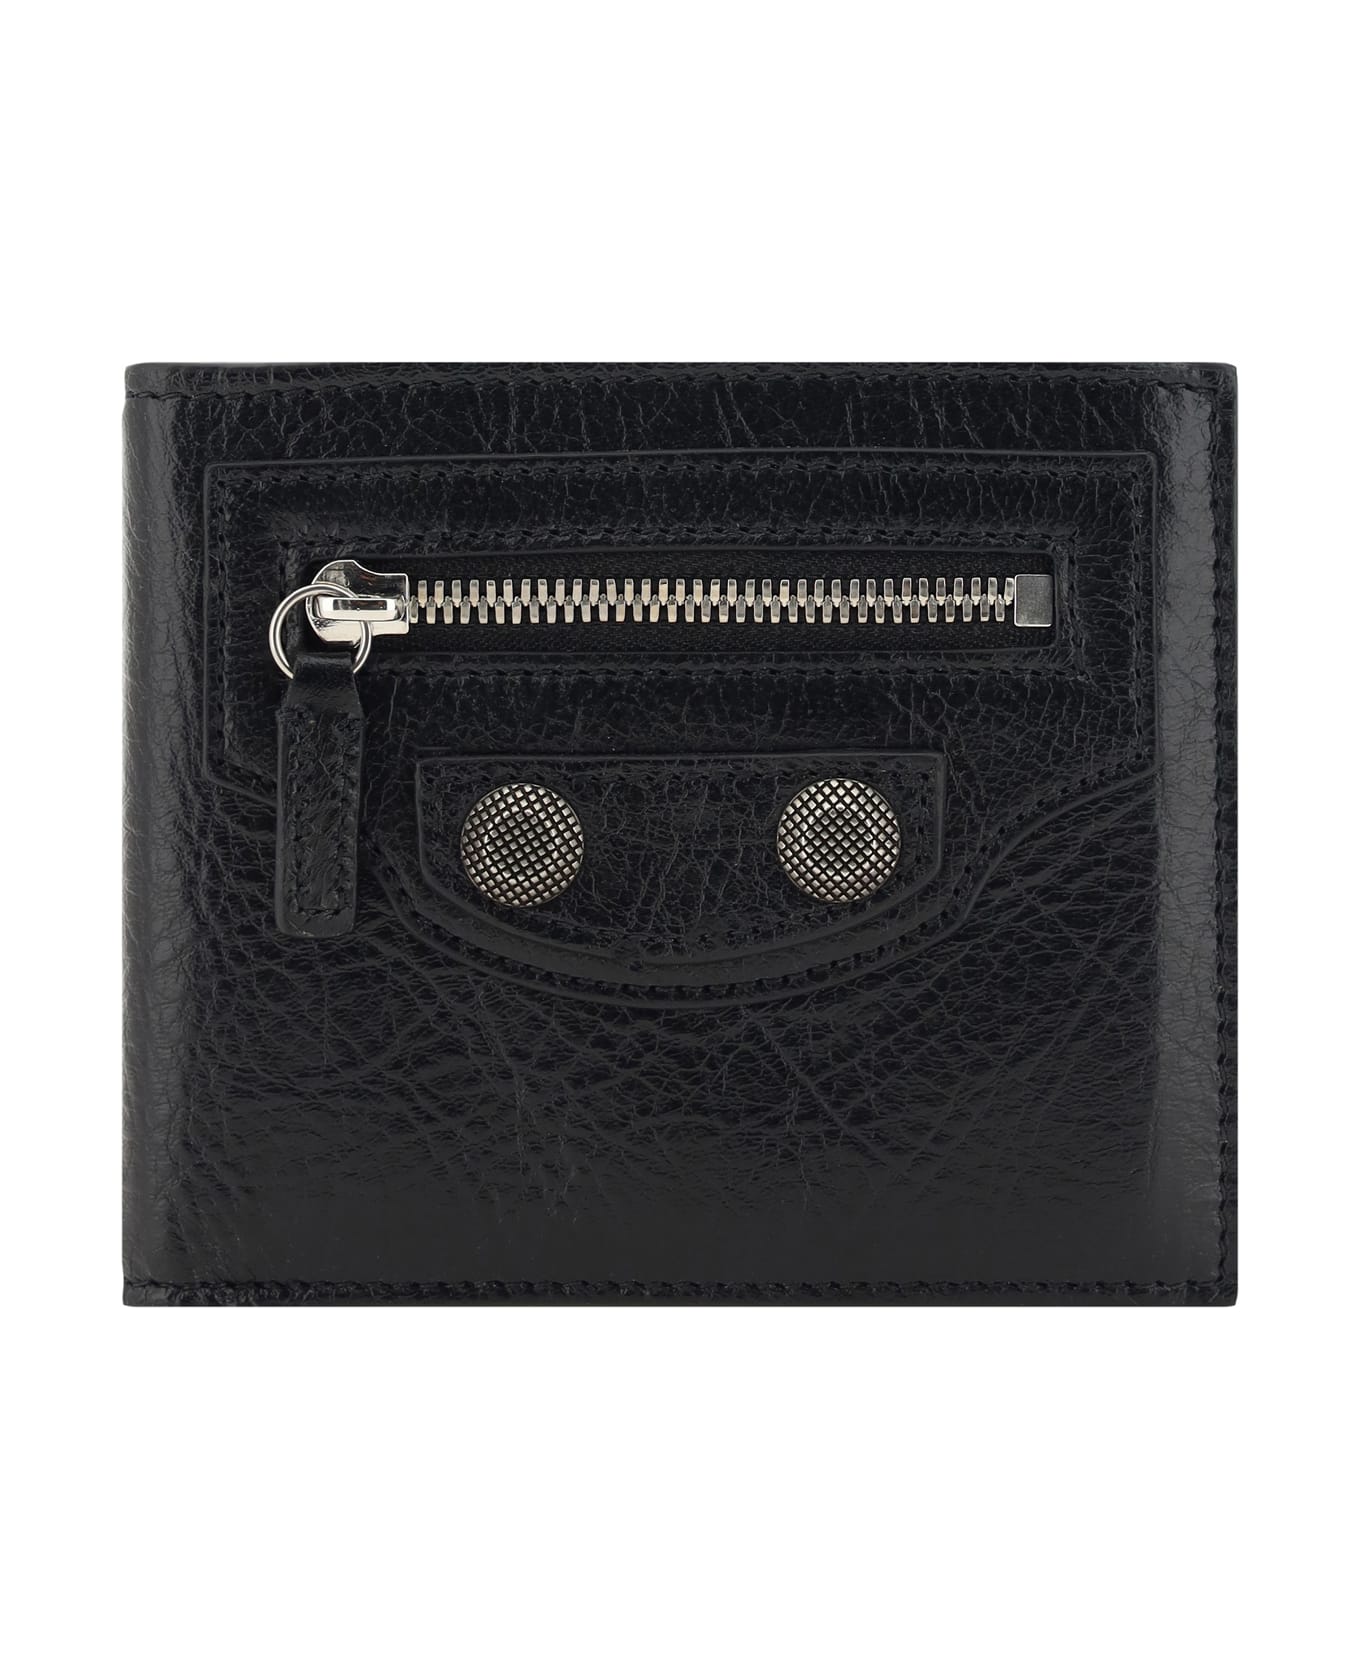 Balenciaga 'le Cagole Men' Wallet - Black 財布